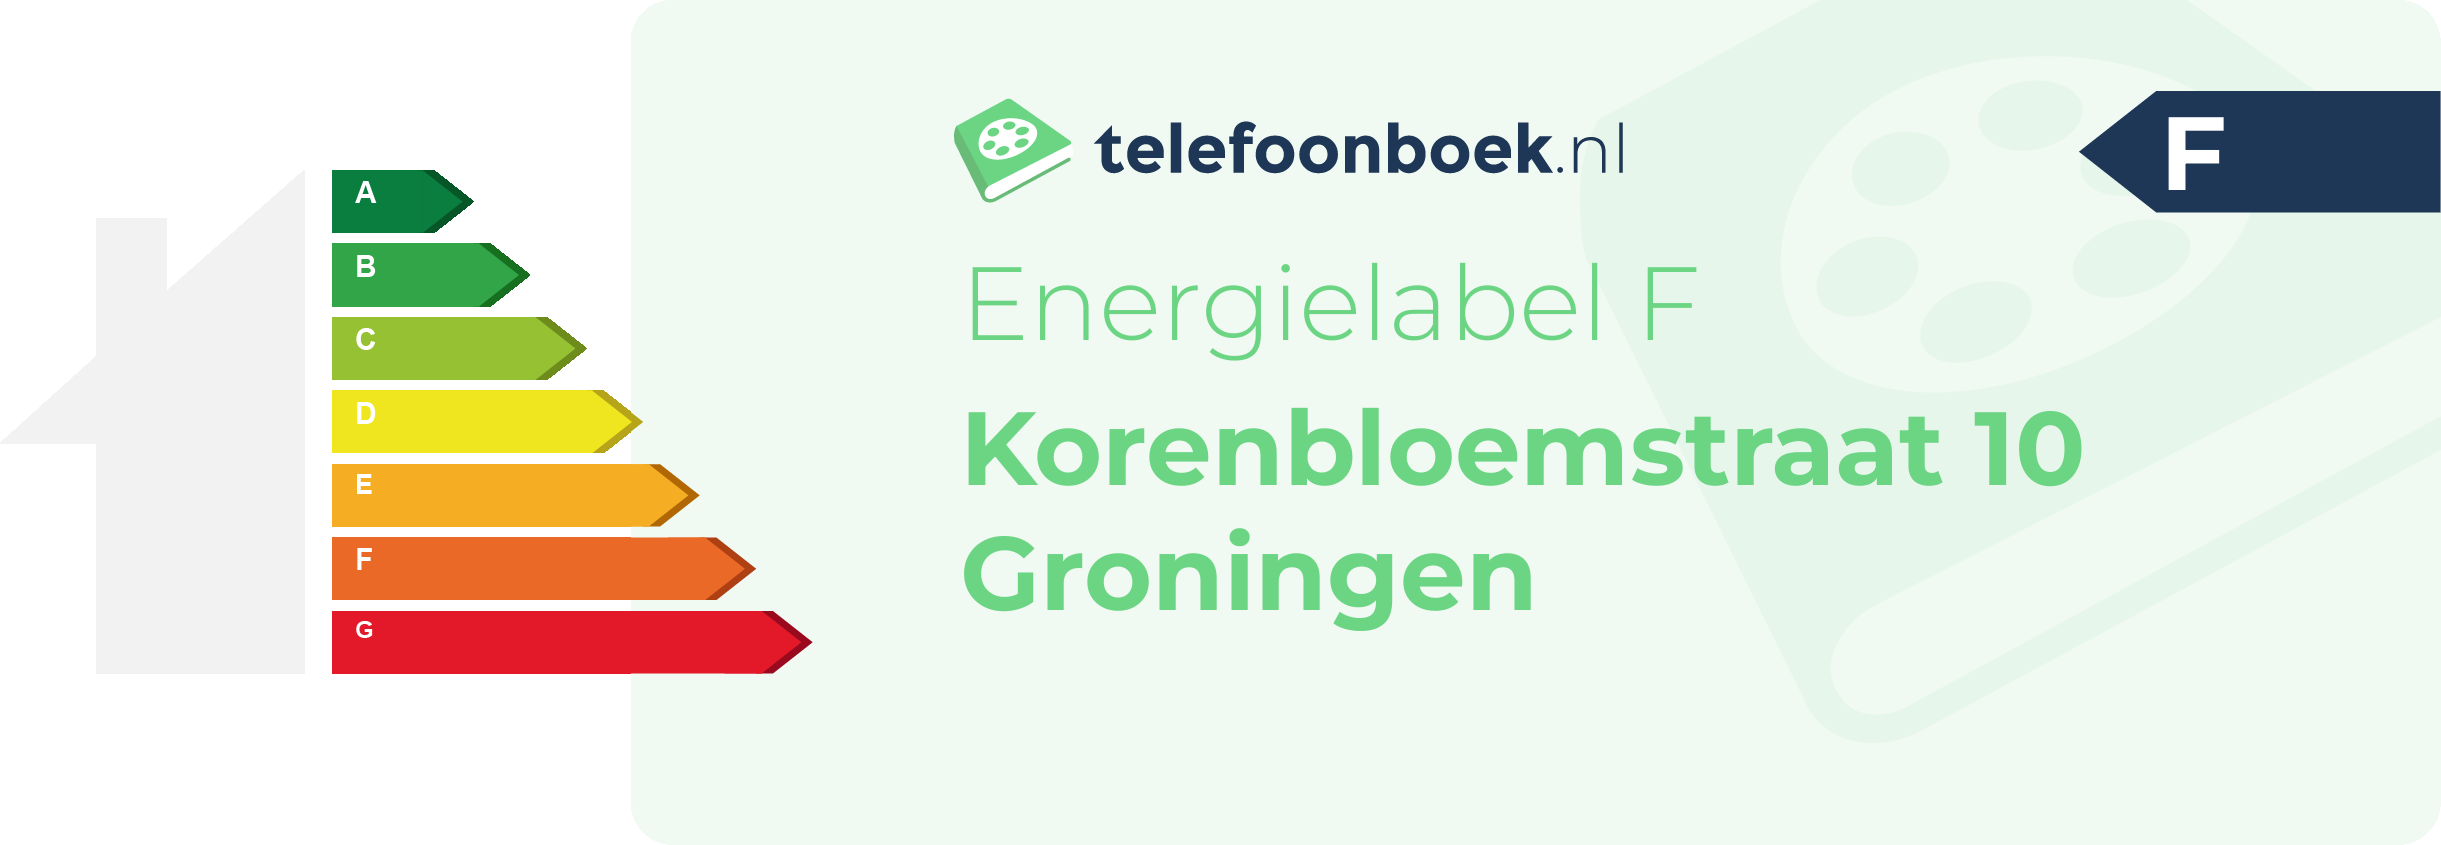 Energielabel Korenbloemstraat 10 Groningen